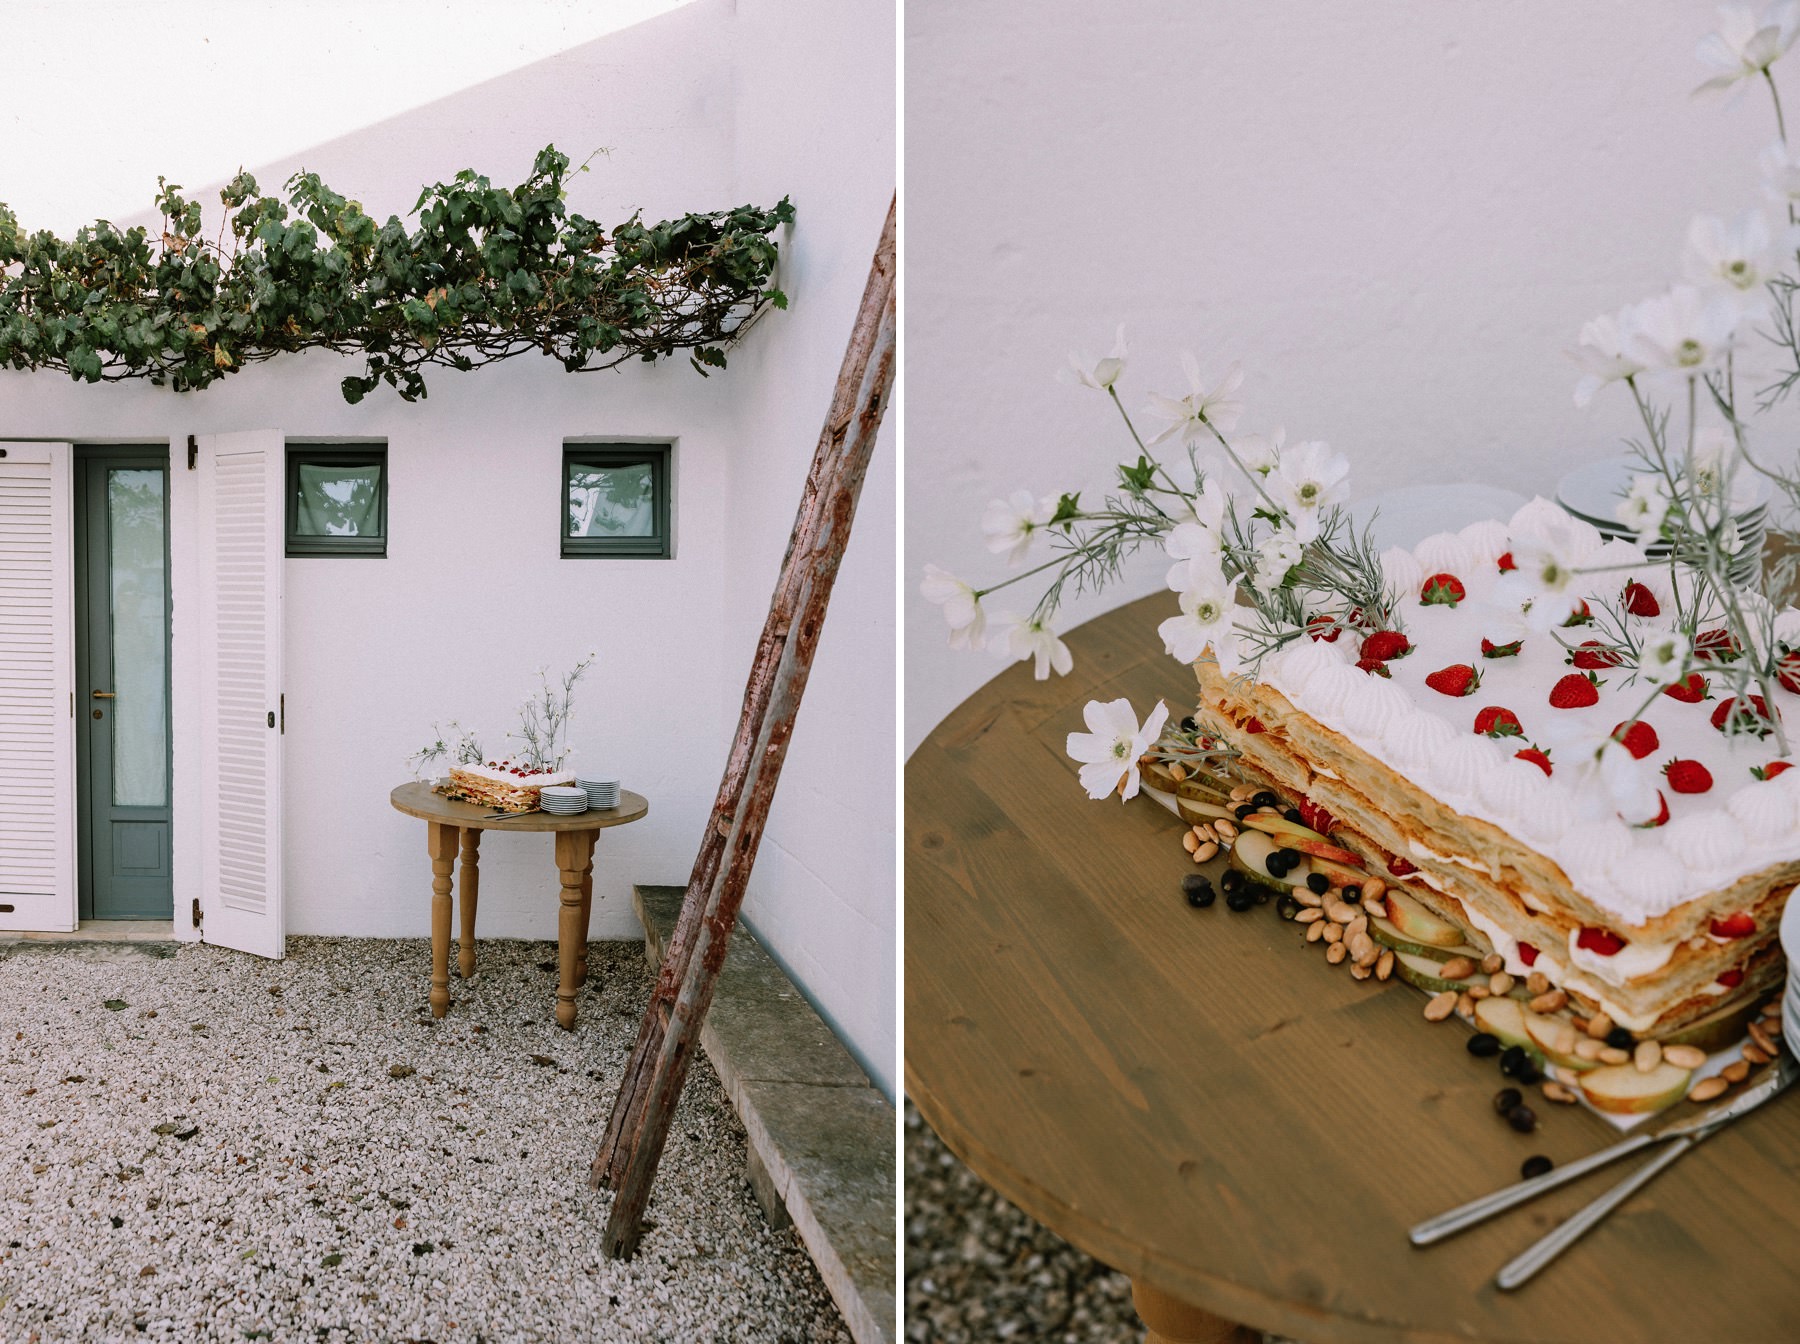 Apulian wedding cake